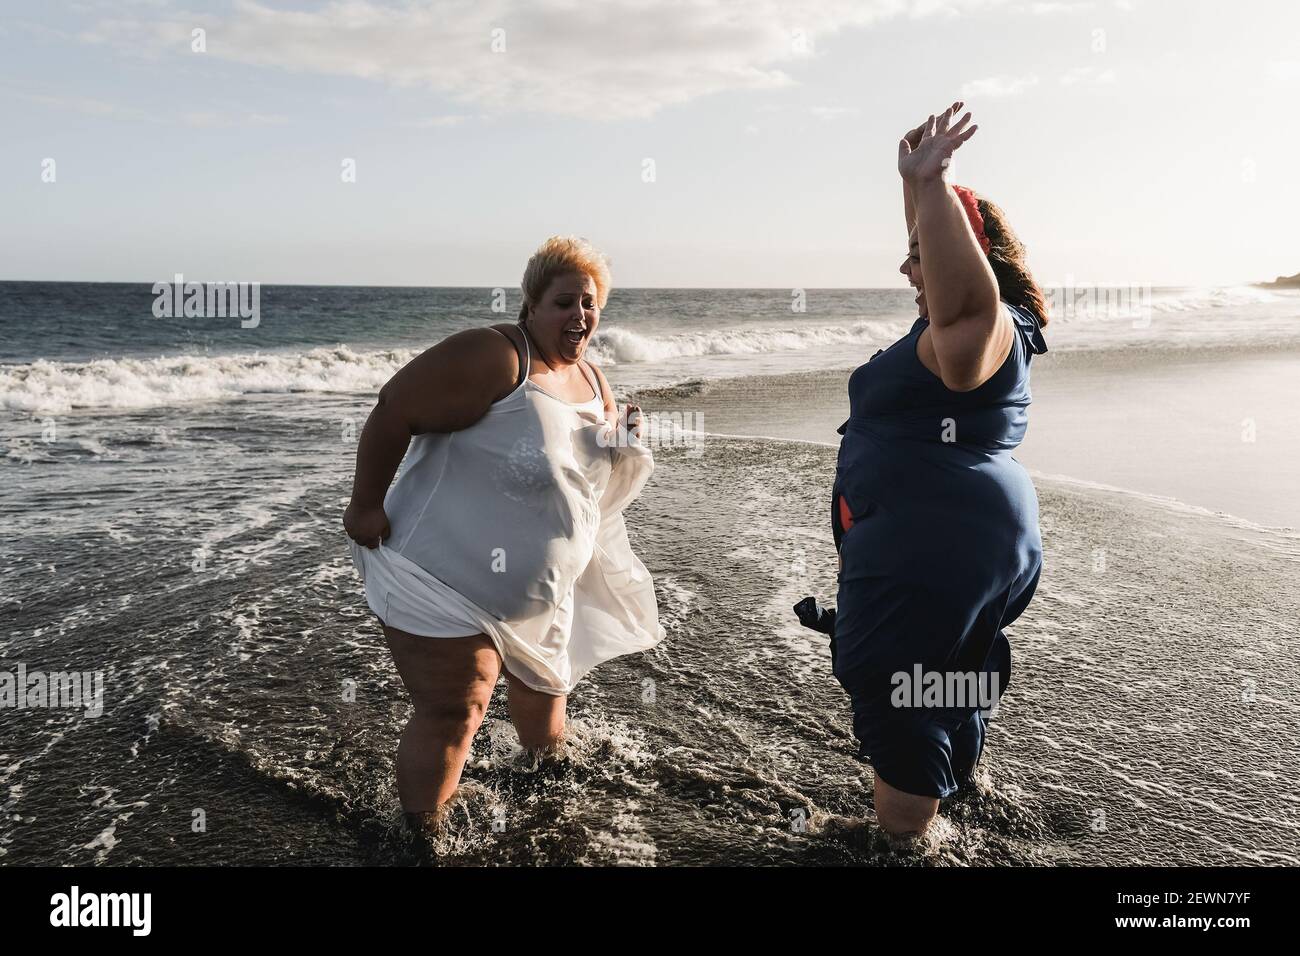 Mollige Frauen Am Strand Bikini Fotos Und Bildmaterial In Hoher Auflösung Alamy